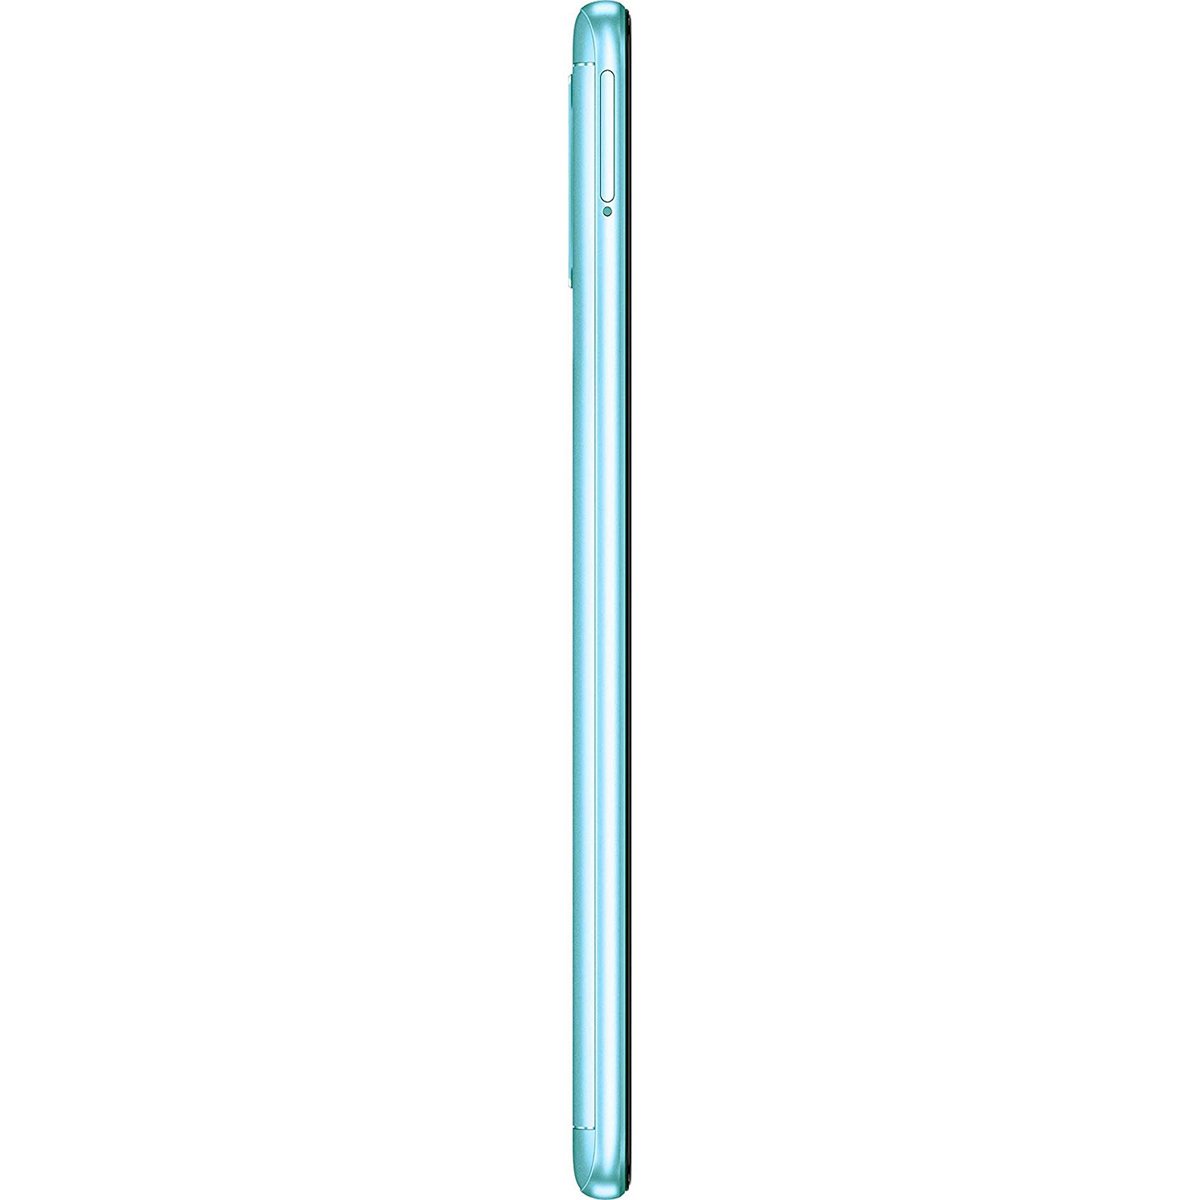 Xiaomi Redmi Note 6 Pro 64GB Blue